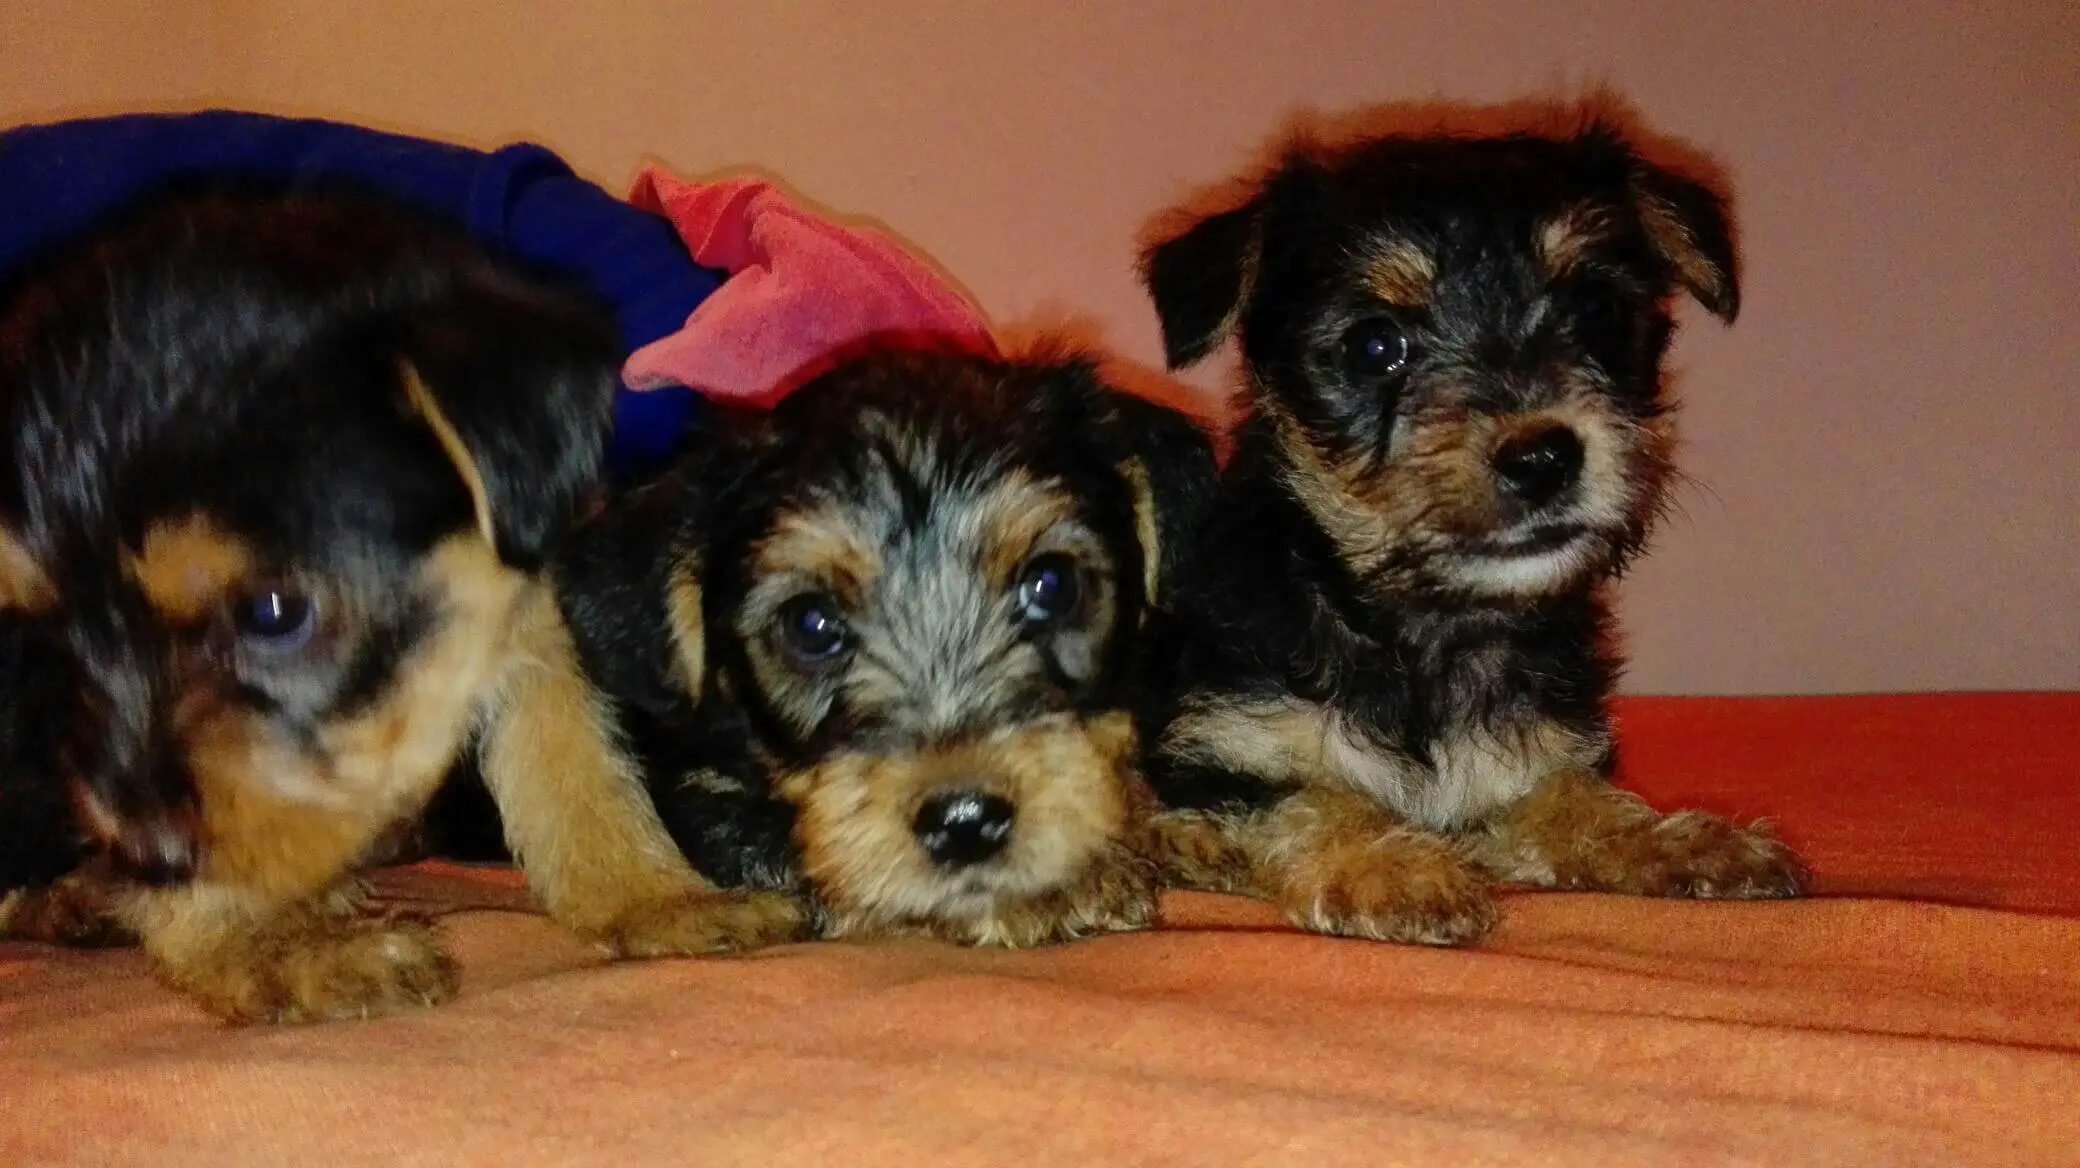 Yorkshire Puppies for Sale in Kwazulu Natal by Jayde Myburgh